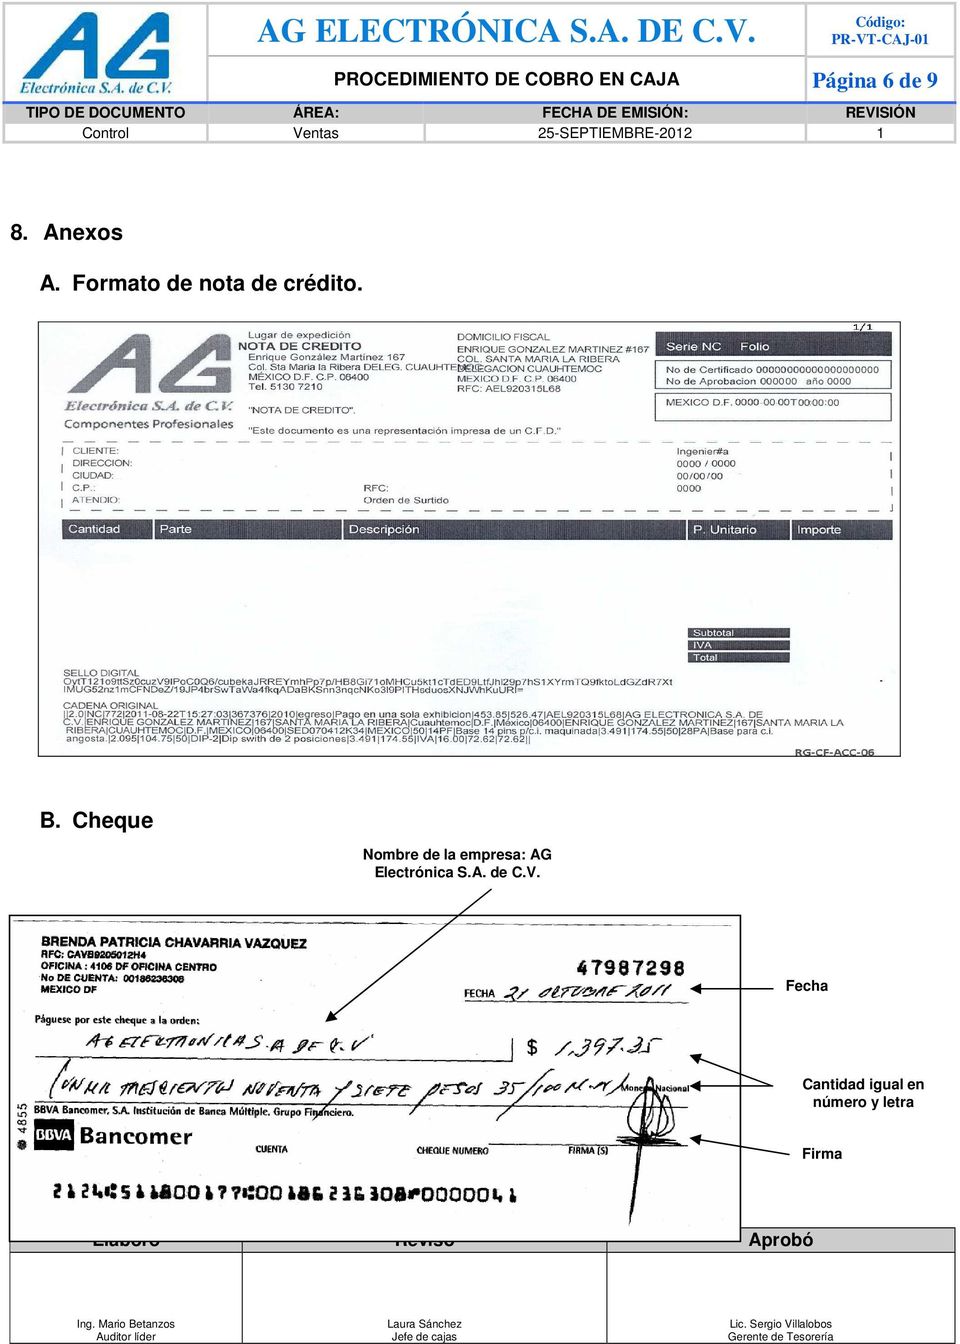 Cheque Nombre de la empresa: AG Electrónica S.A. de C.